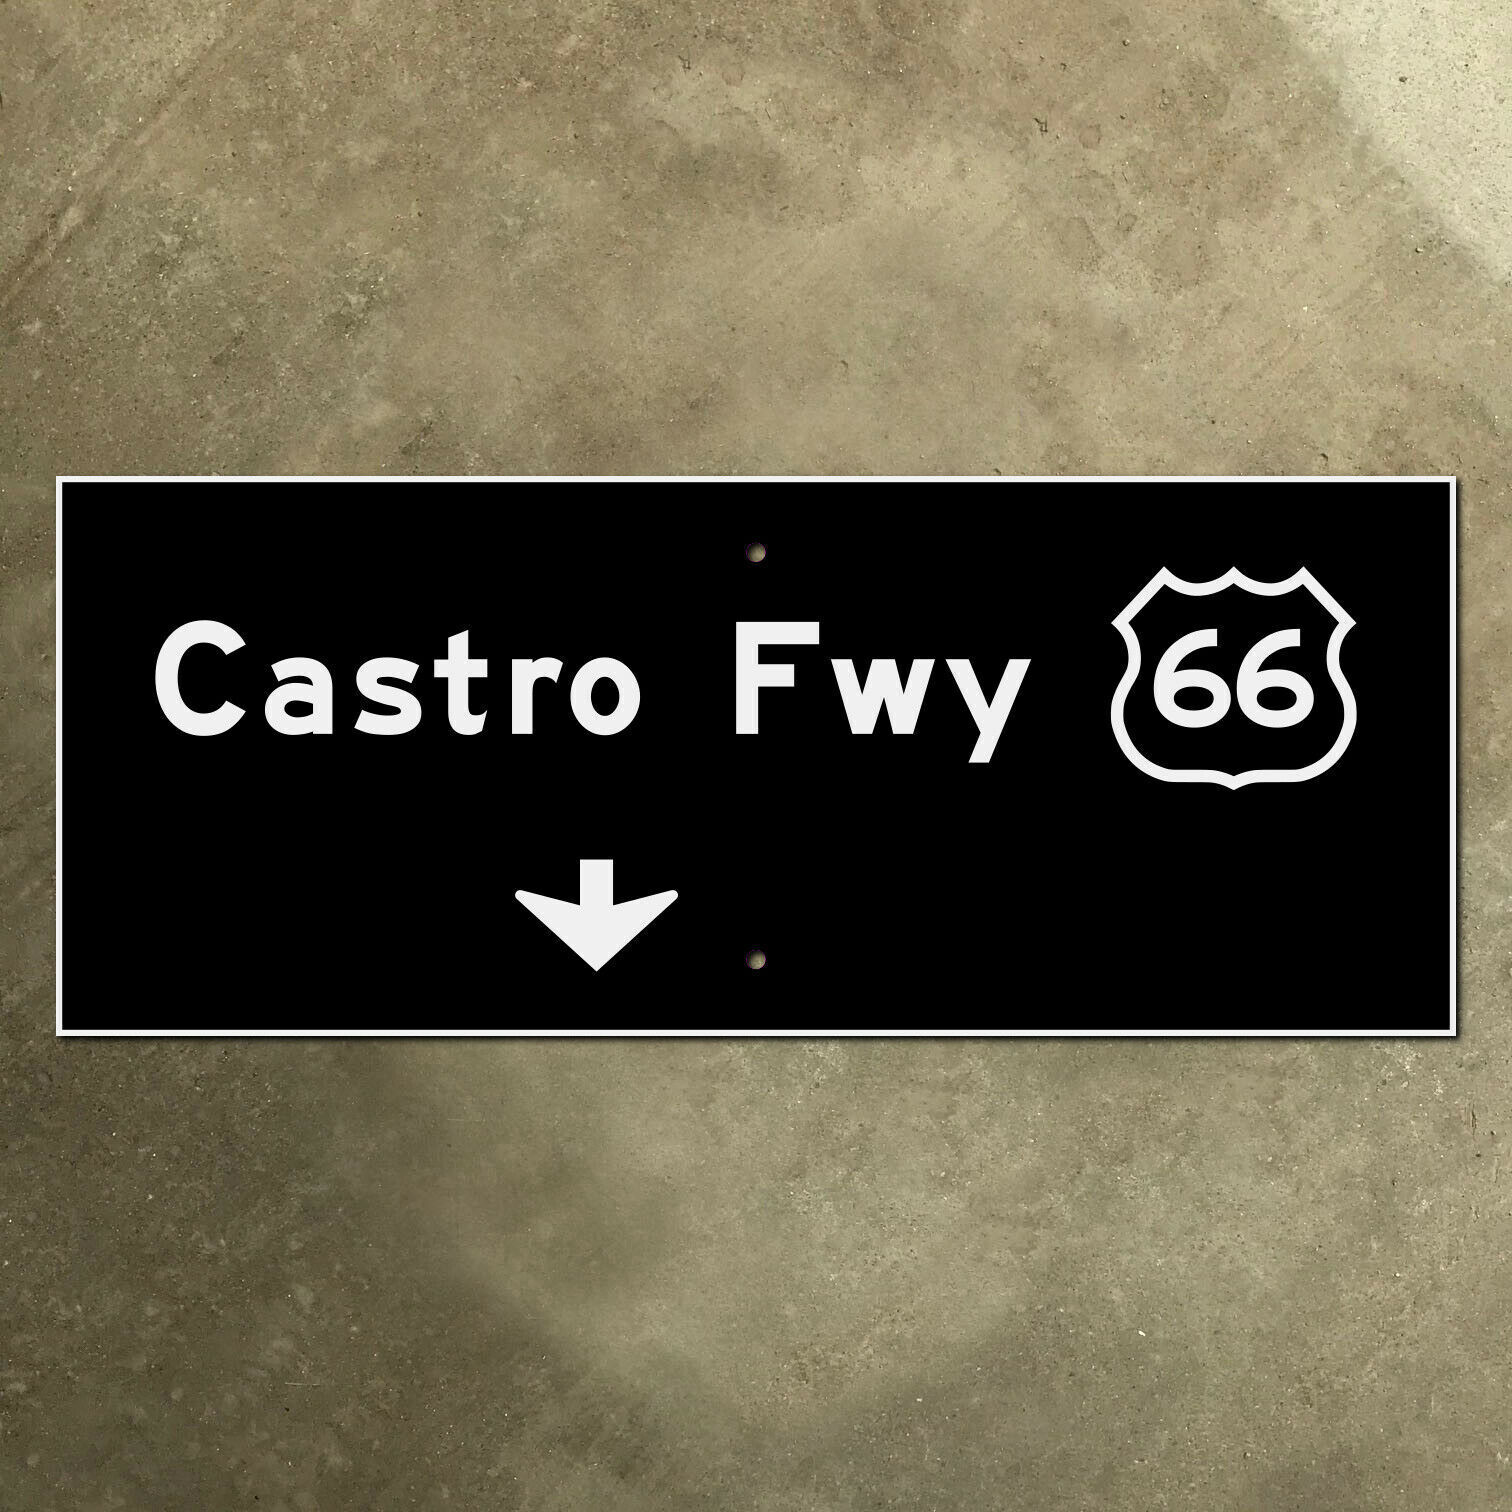 California US 66 Castro Freeway Pasadena highway road guide sign 1956 18x7